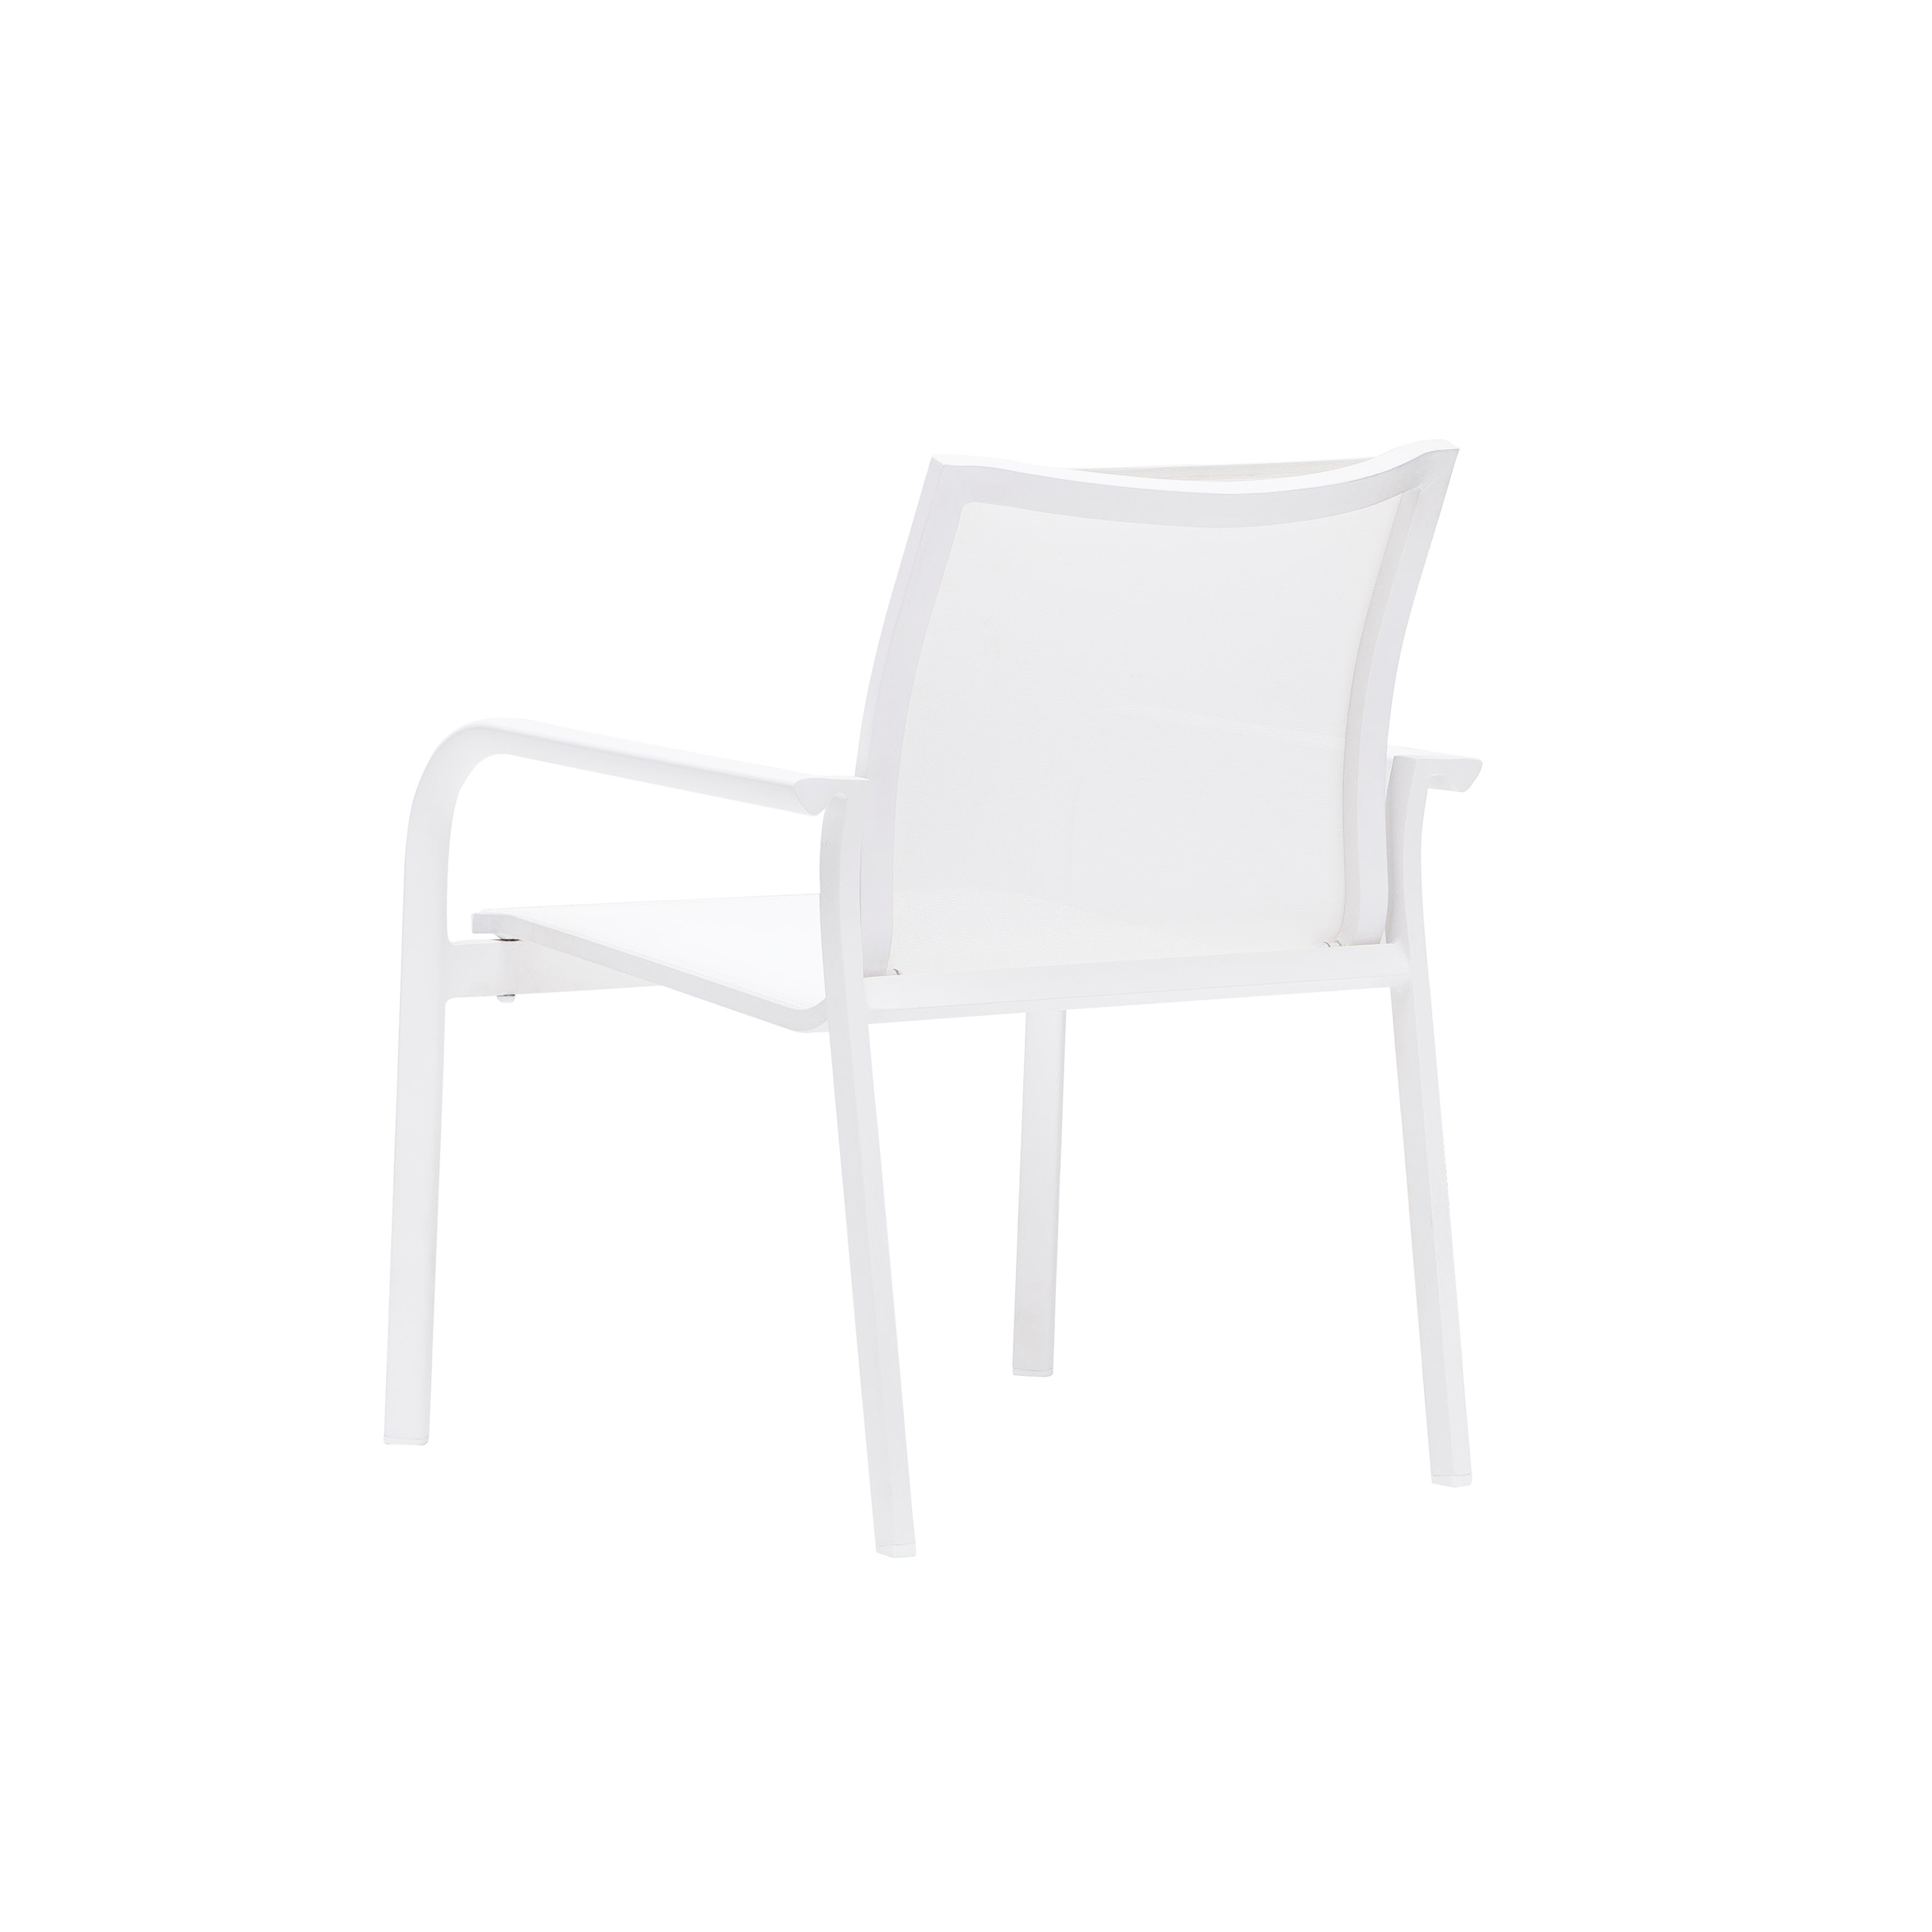 Space textile leisure chair S2